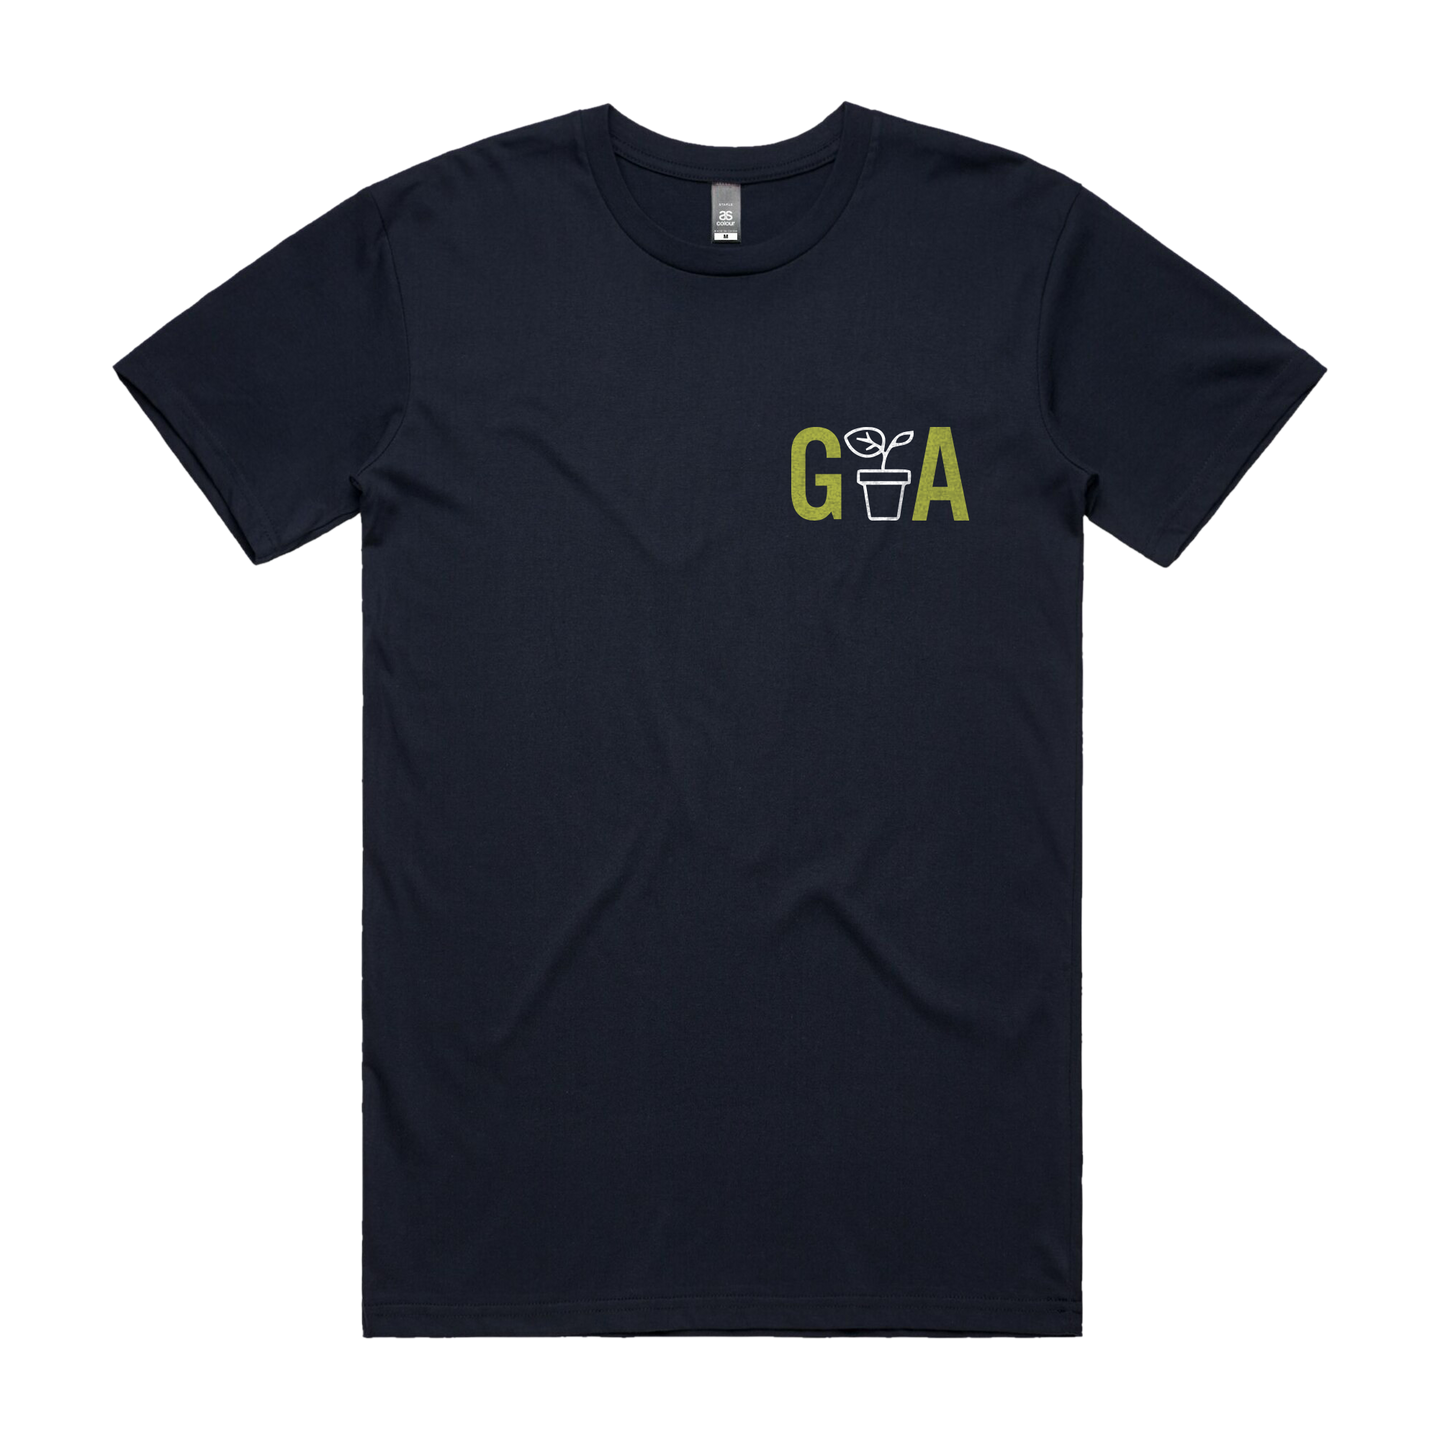 Gardening Australia Navy T-Shirt with GA Small Logo Design